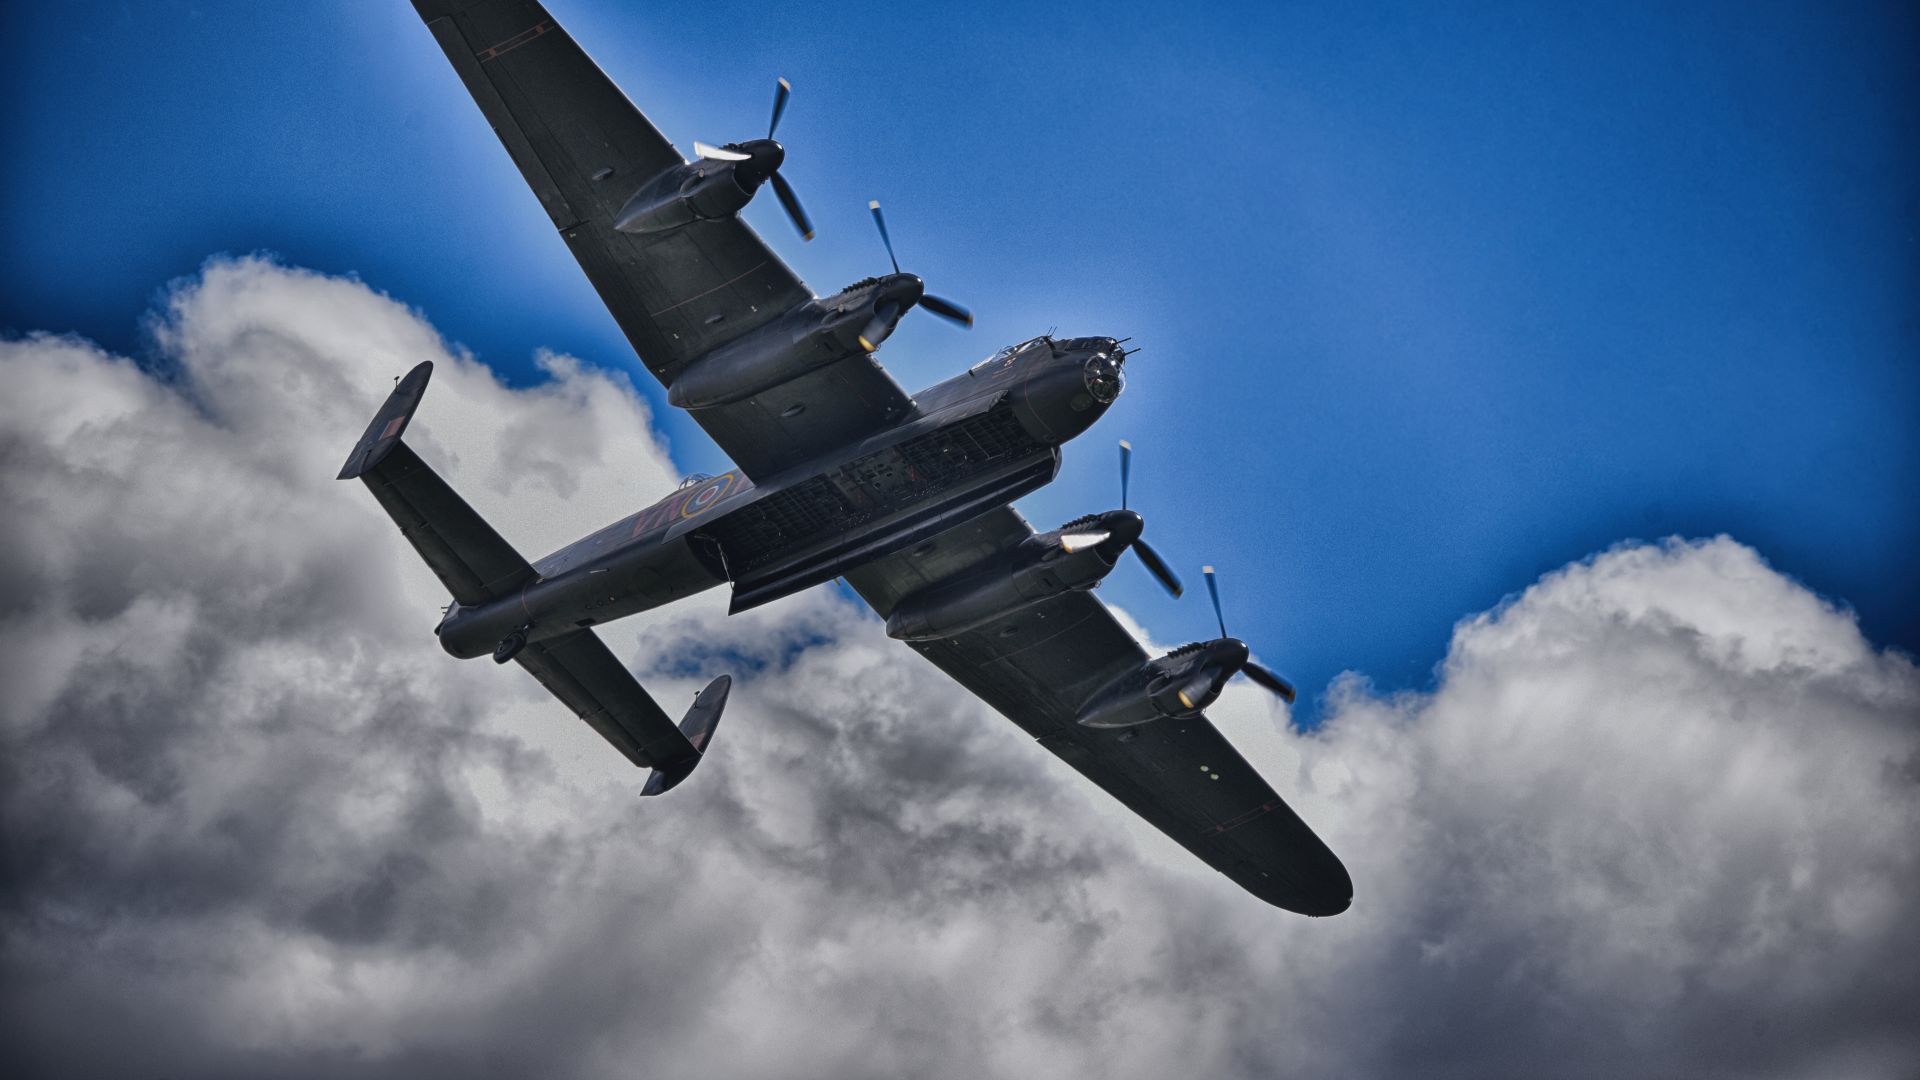 Wallpaper Lancaster bomber, Avro Lancaster, military aircraft, clouds, 5k